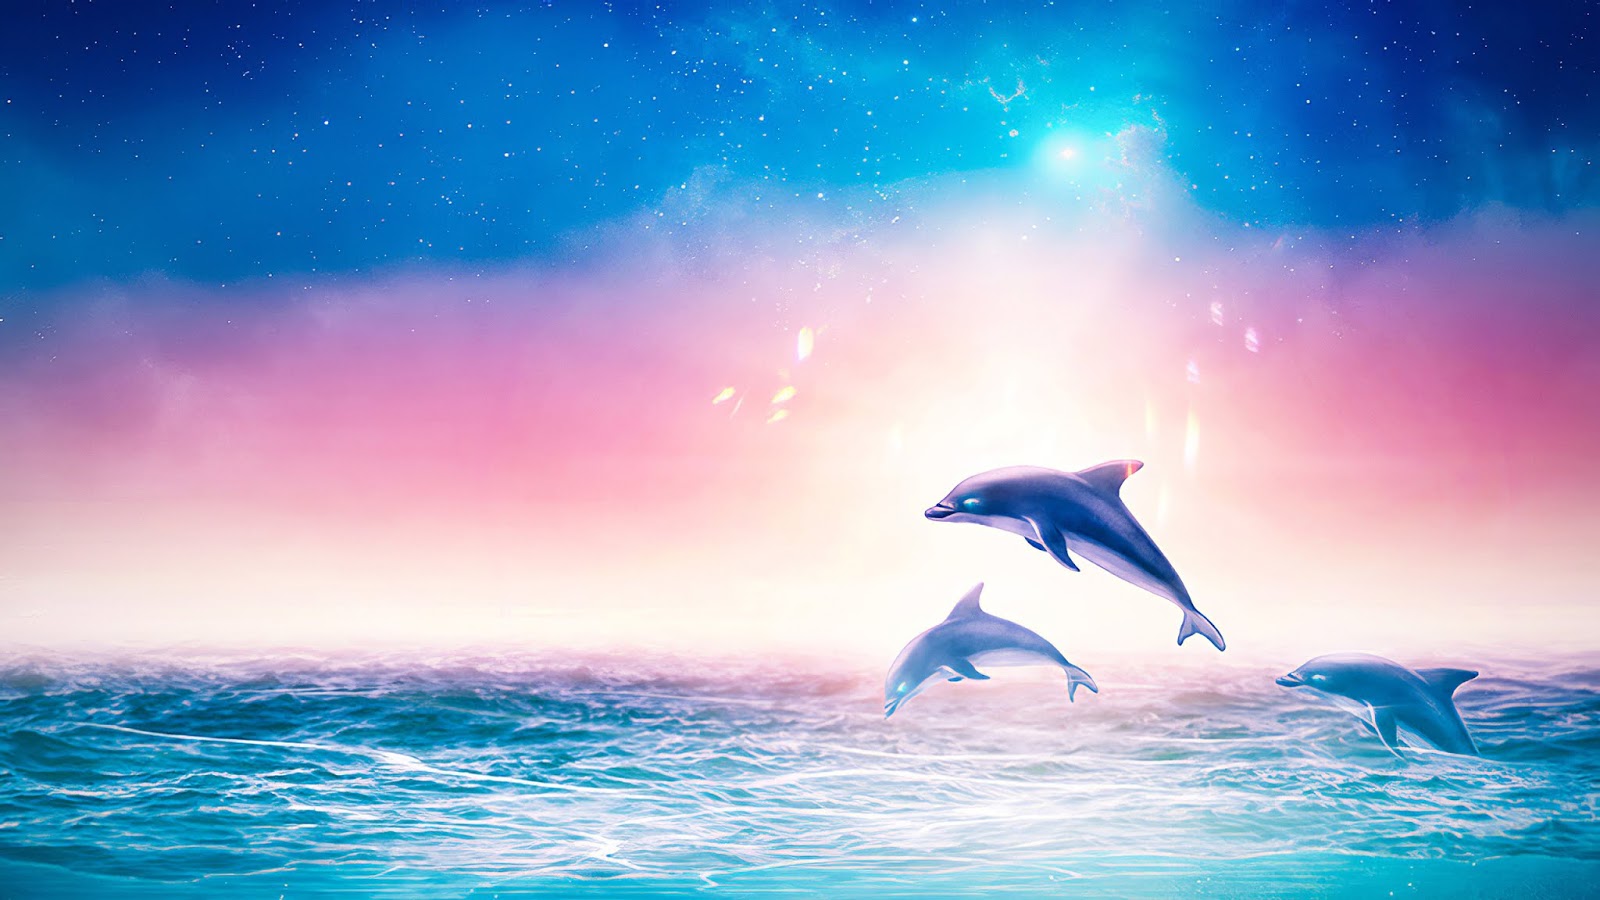 Download Wallpaper Dolphins Fantasy, Hd, 4k Images. 